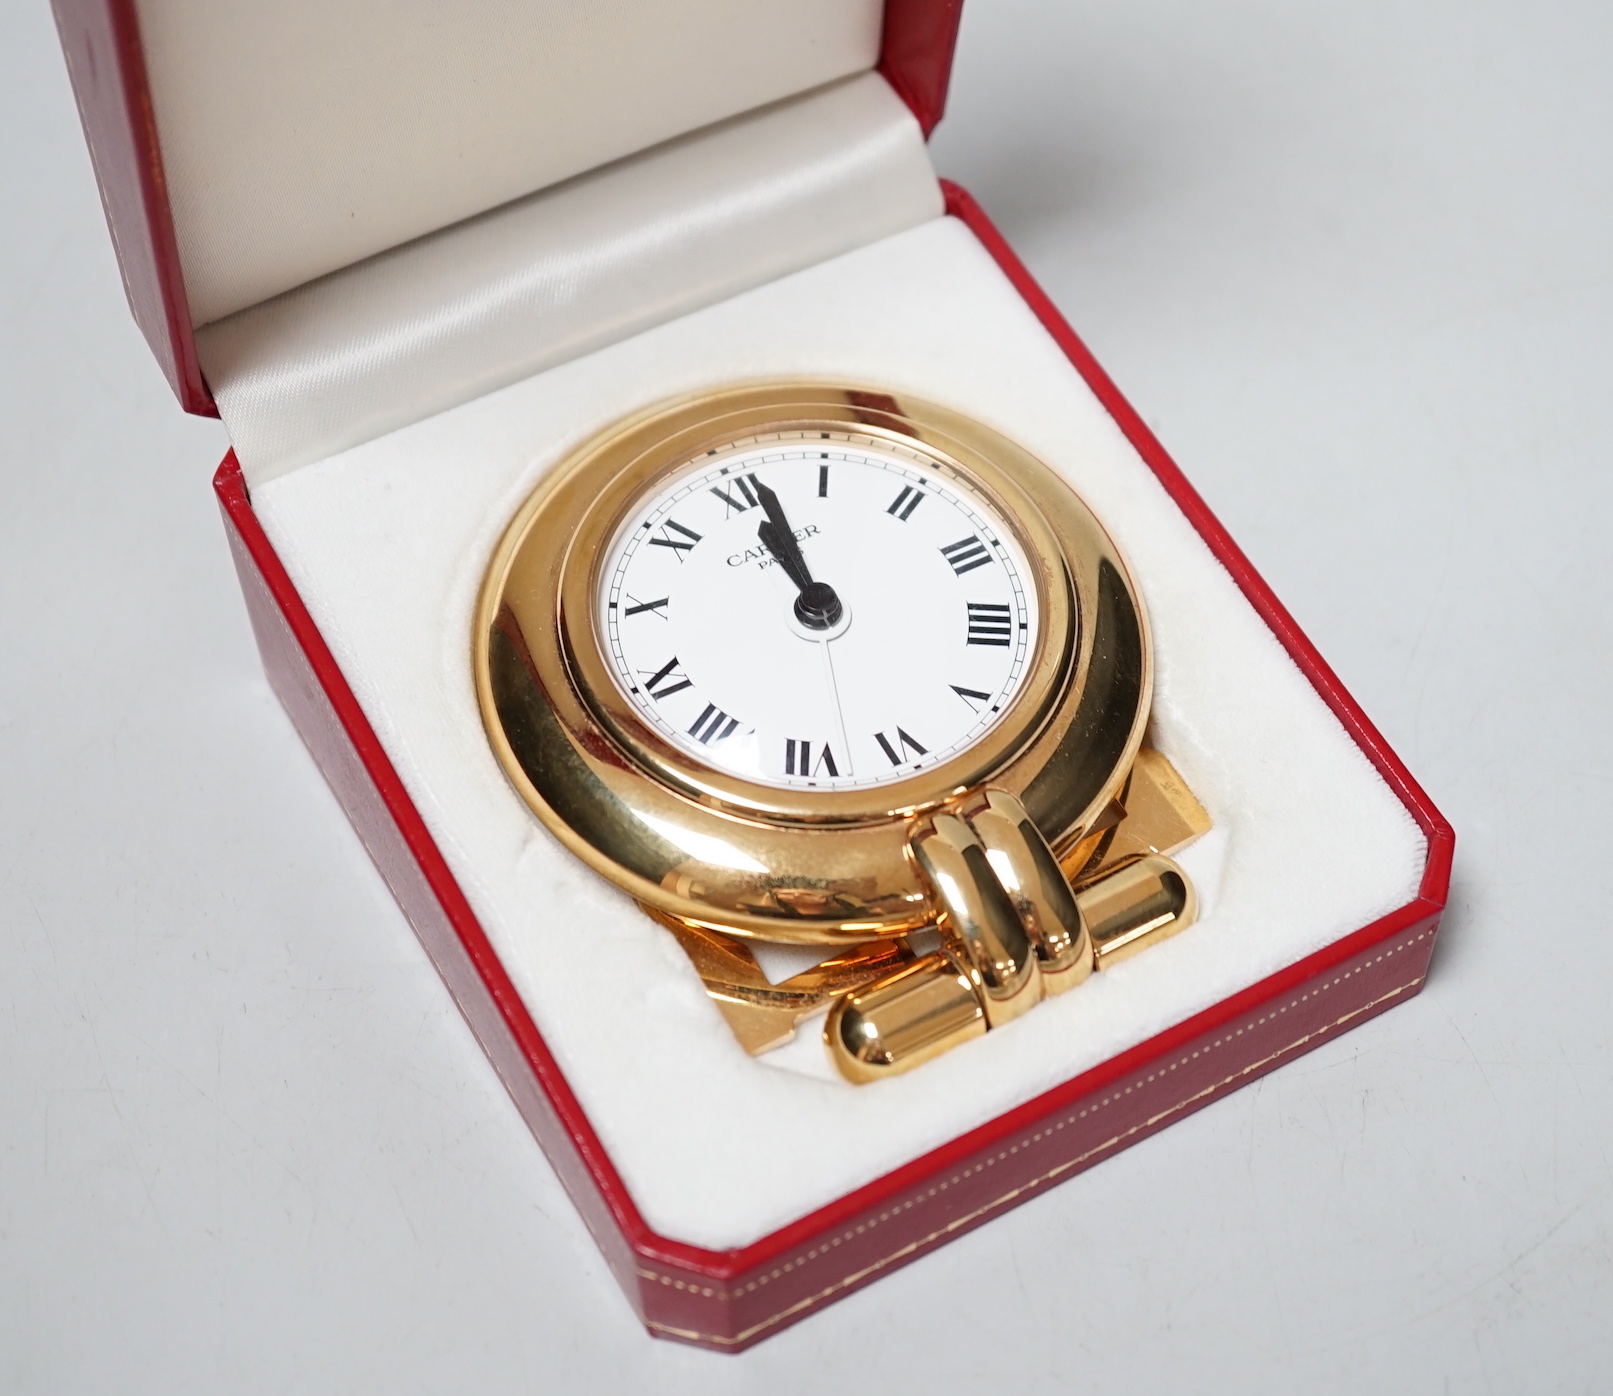 A Cartier travel timepiece, 9cm high, cased